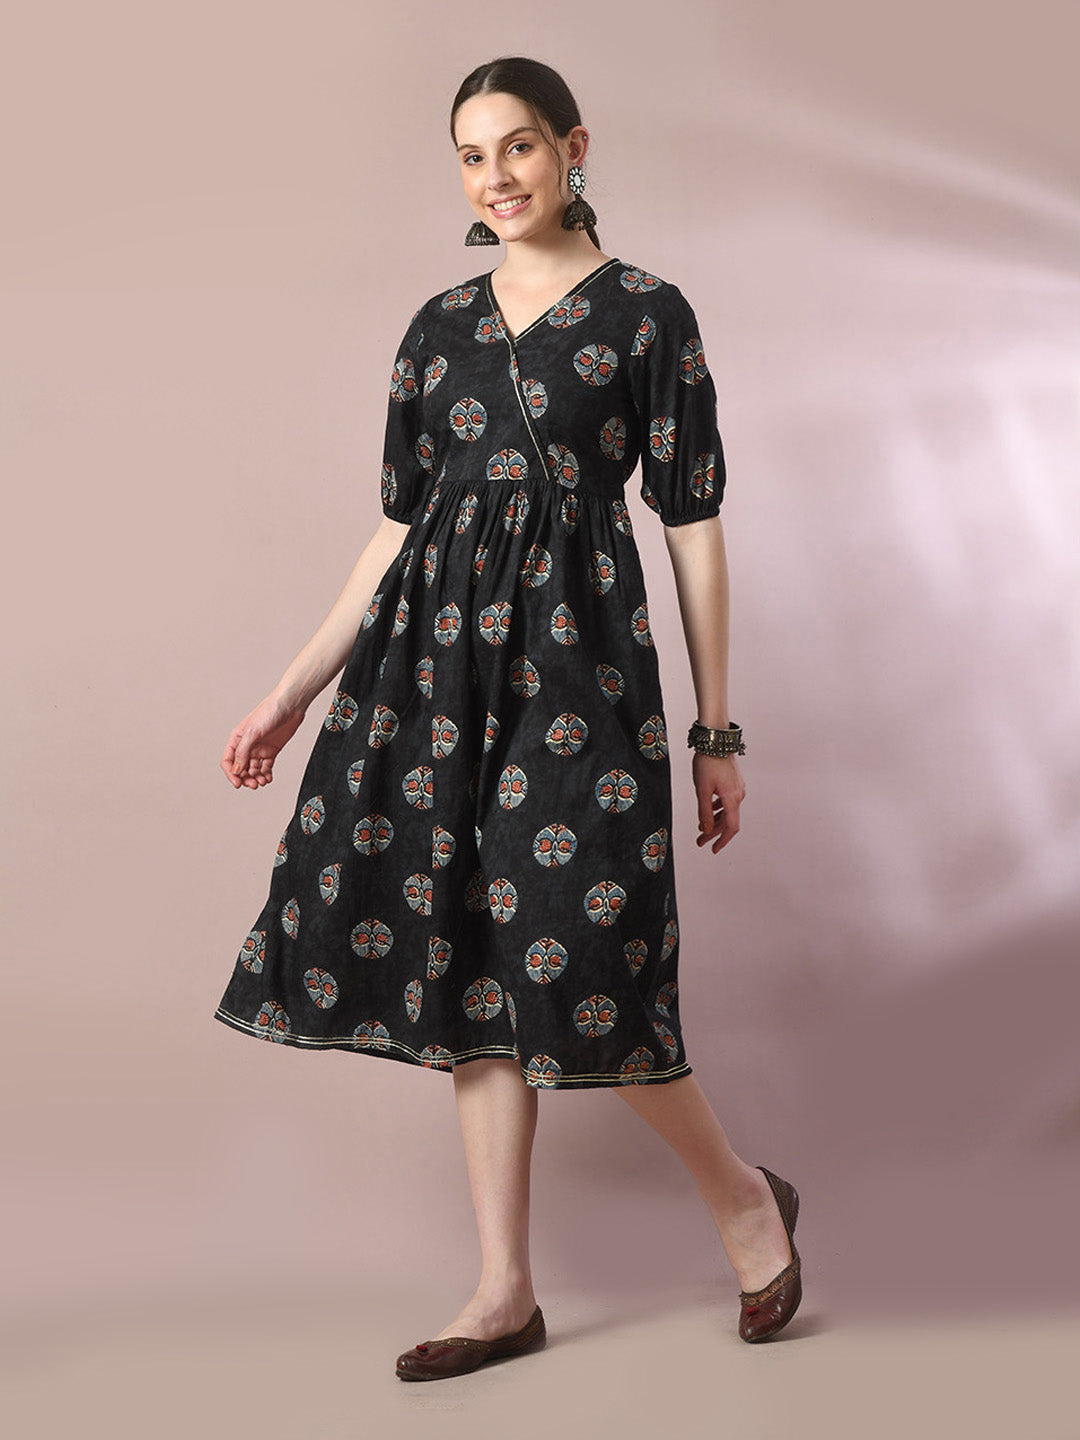 Women's  Black Printed Cotton V-Neck Empire Party Dress  - Myshka